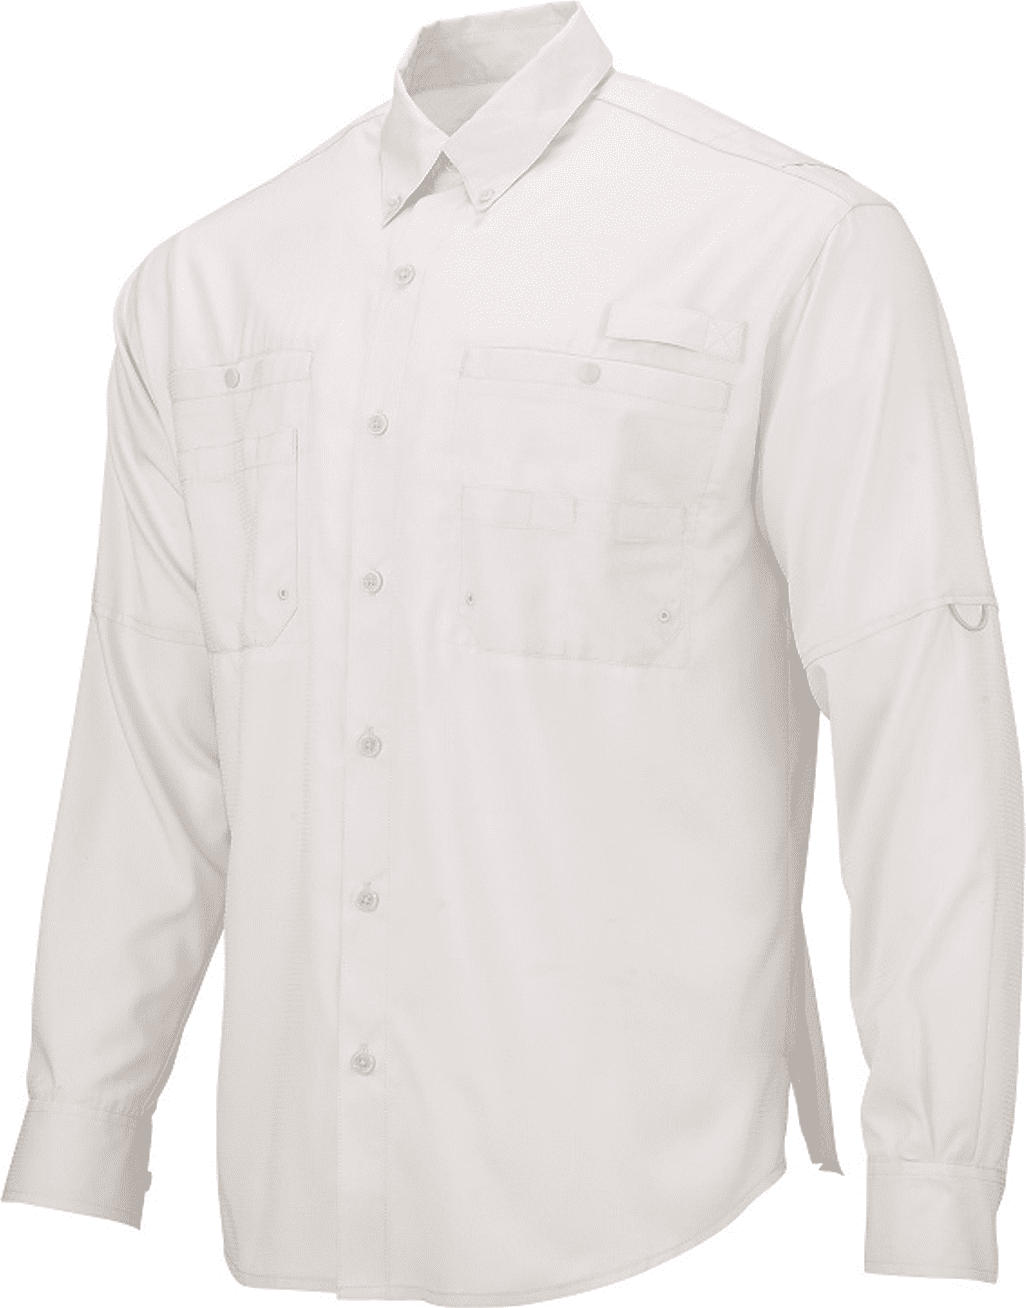 Paragon 702 KittyHawk Performance Long Sleeve Fishing Shirt - White - HIT a Double